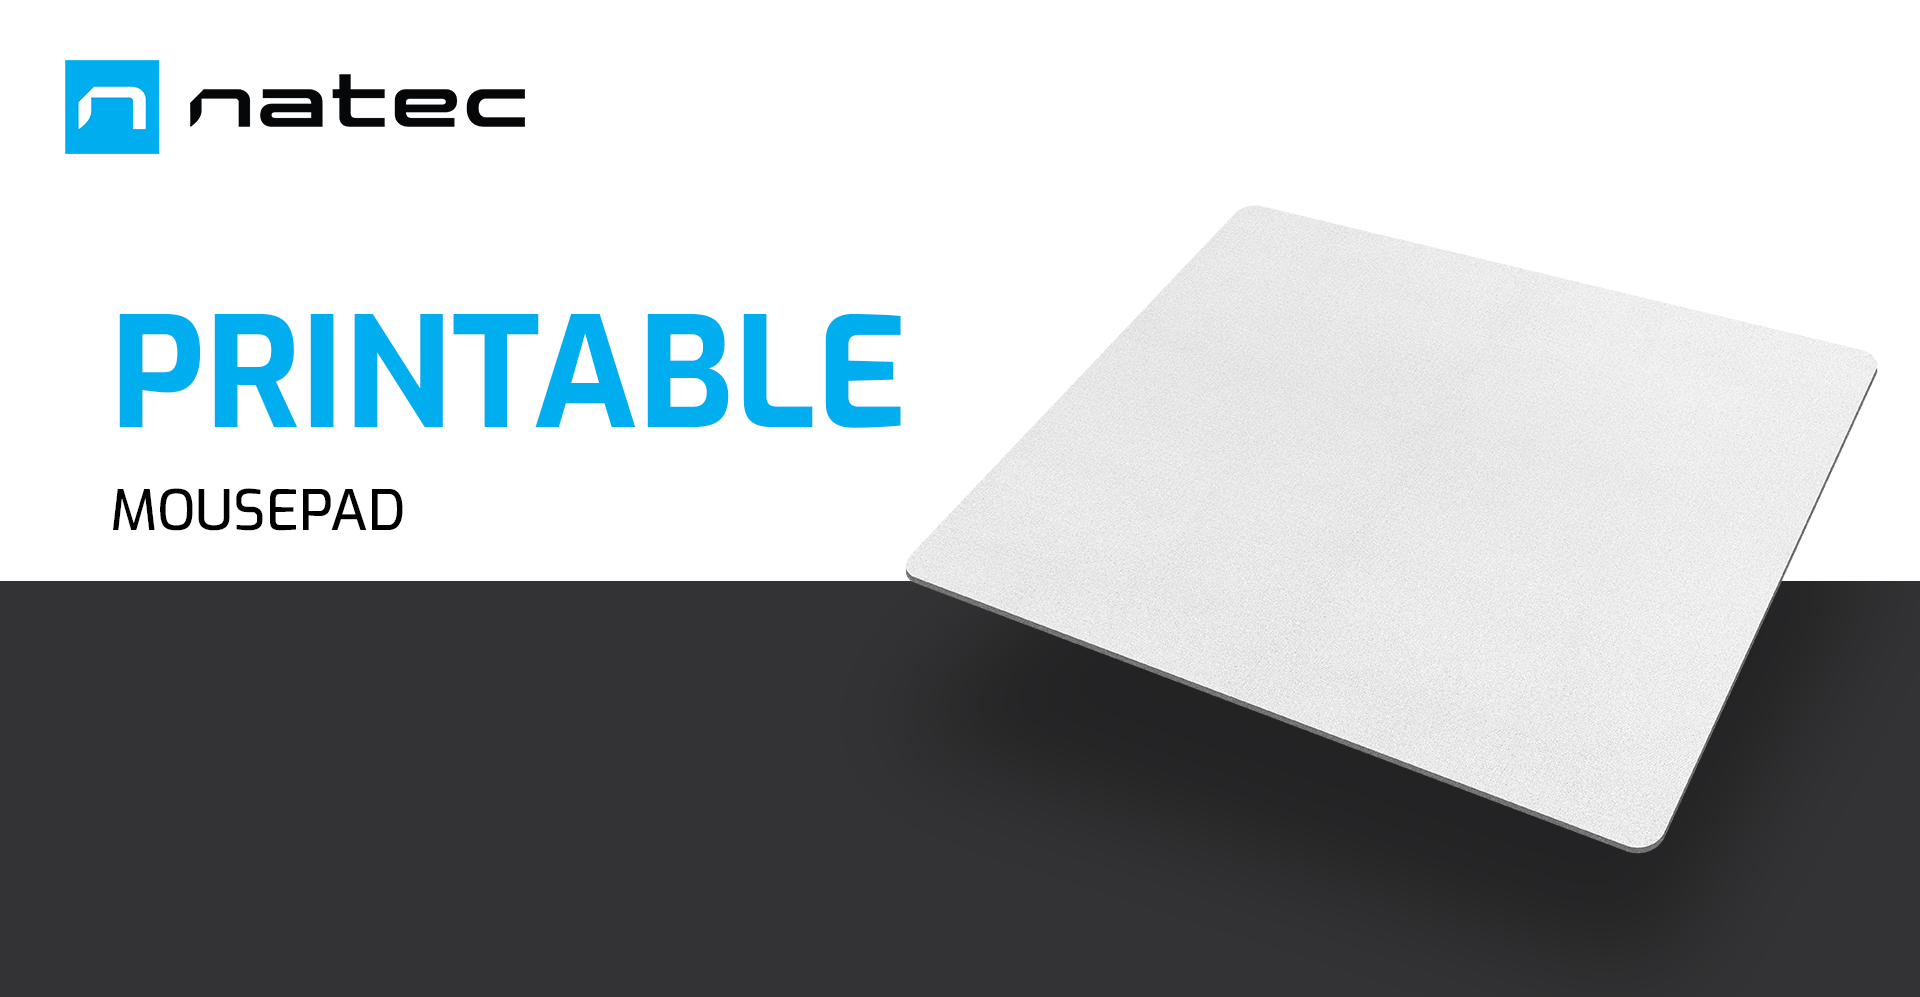 mouse pad natec printable white 300x250mm 1